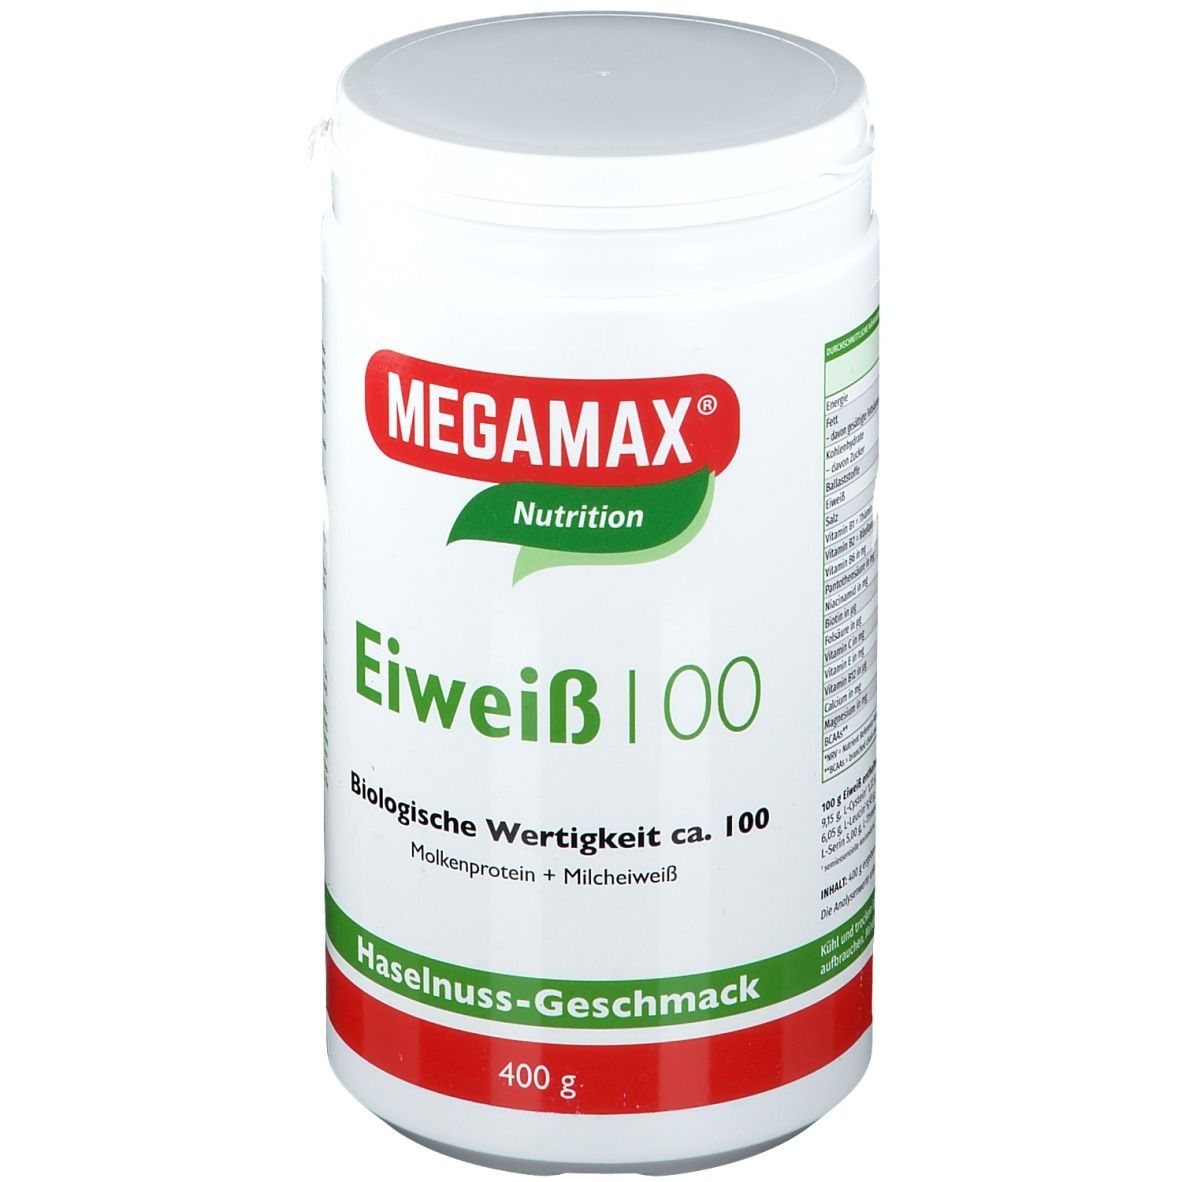 MEGAMAX® Nutrition Eiweiß 100 Haselnuss-Geschmack